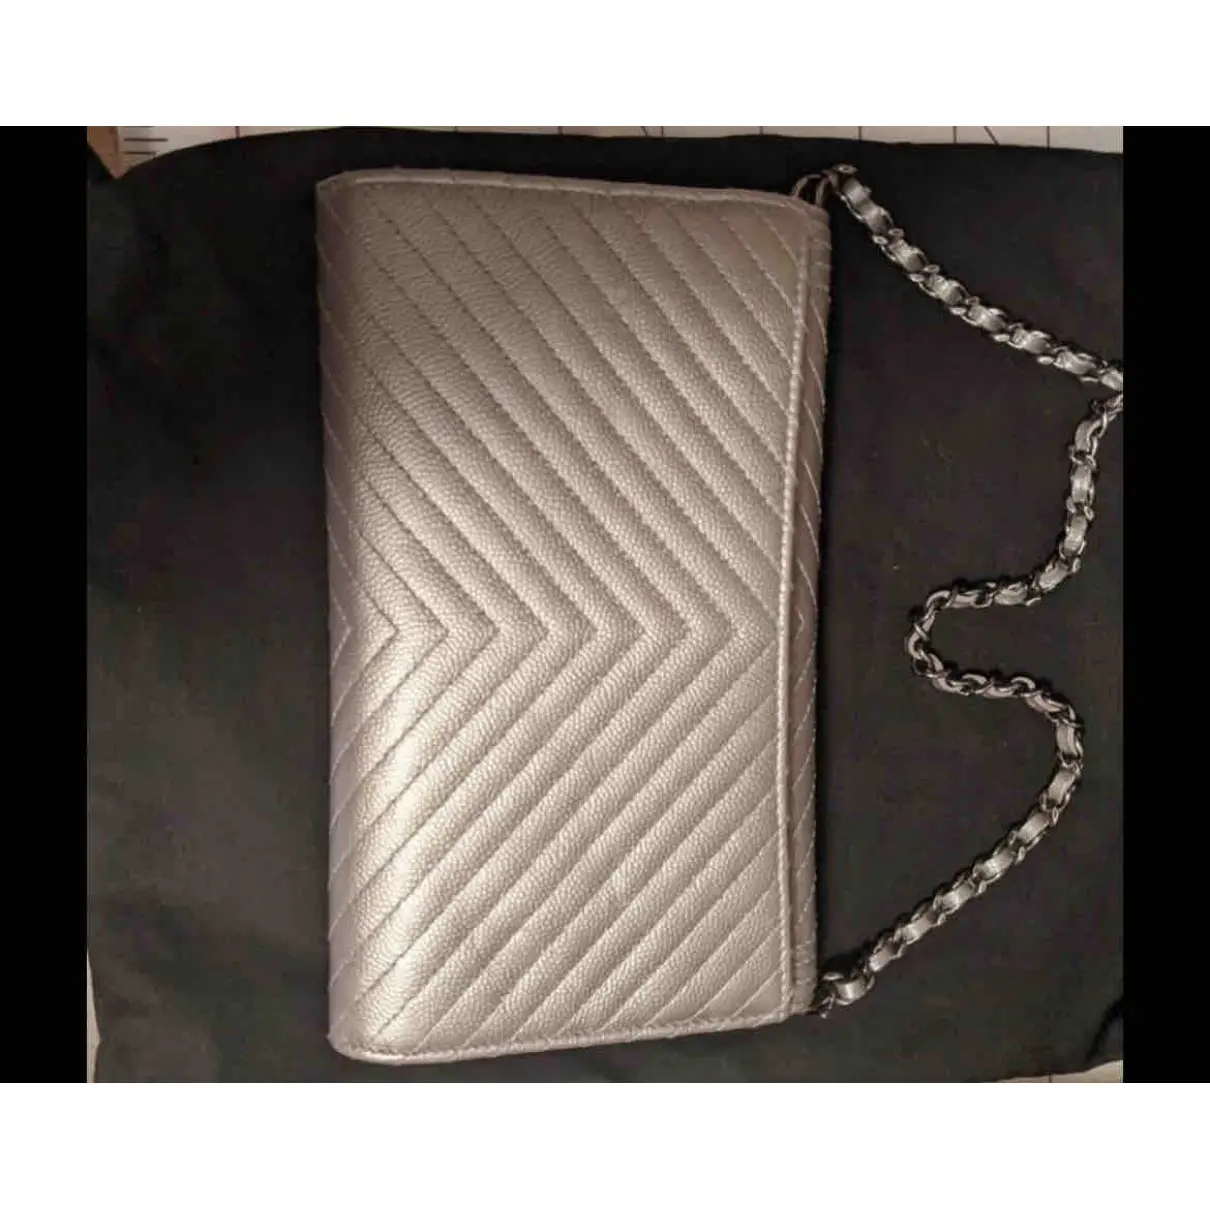 Buy Chanel Boy leather handbag online